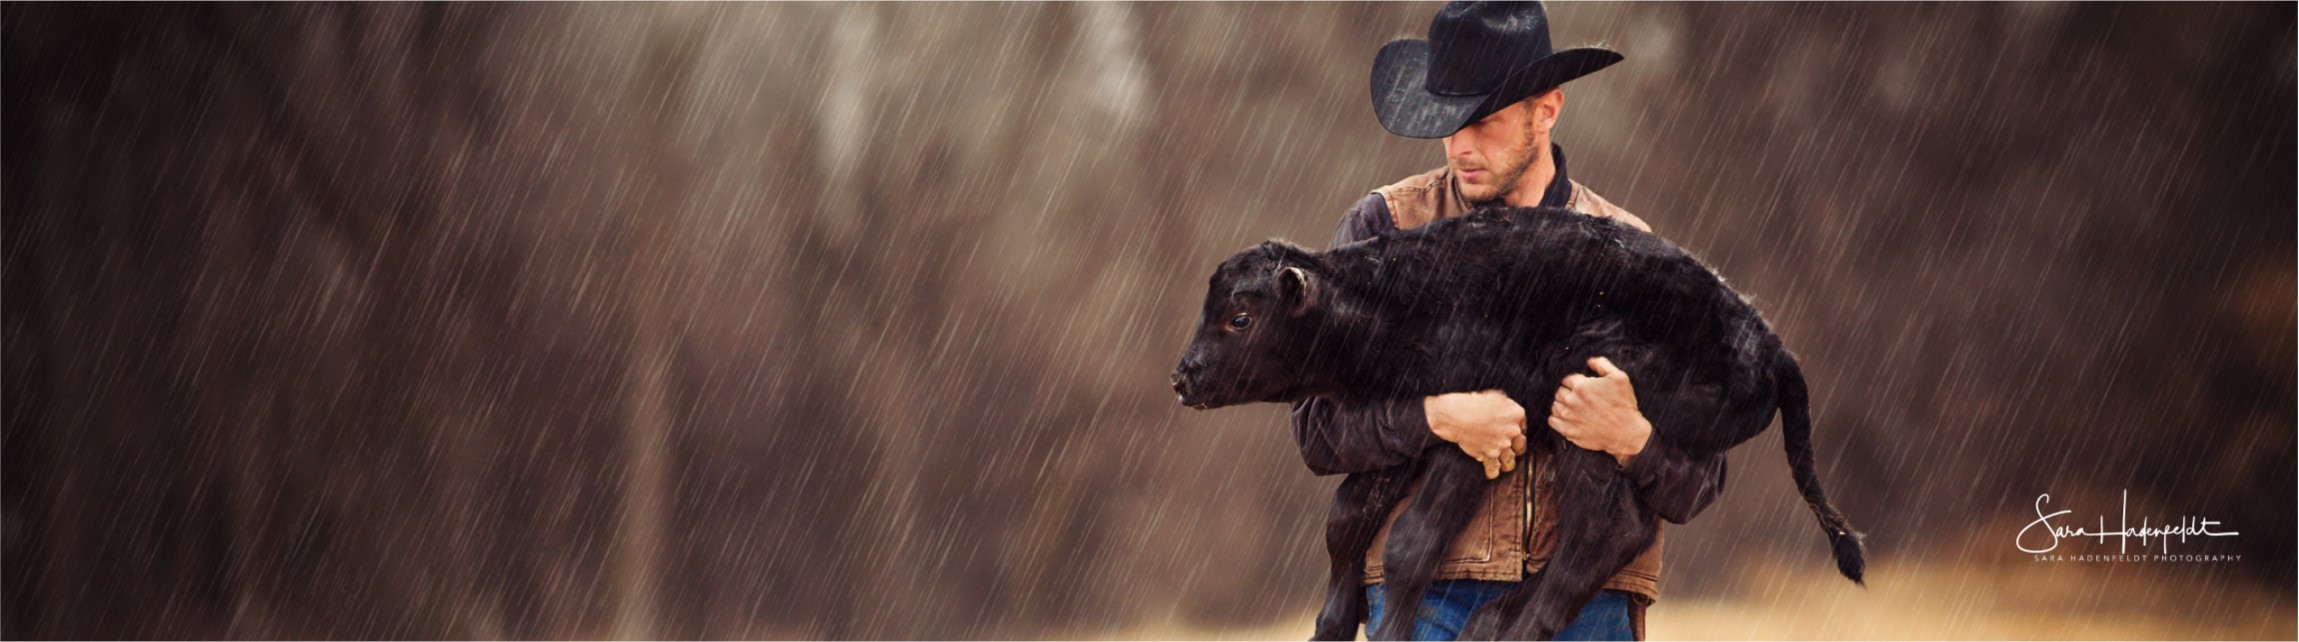 rancher in rain photo is flipped around